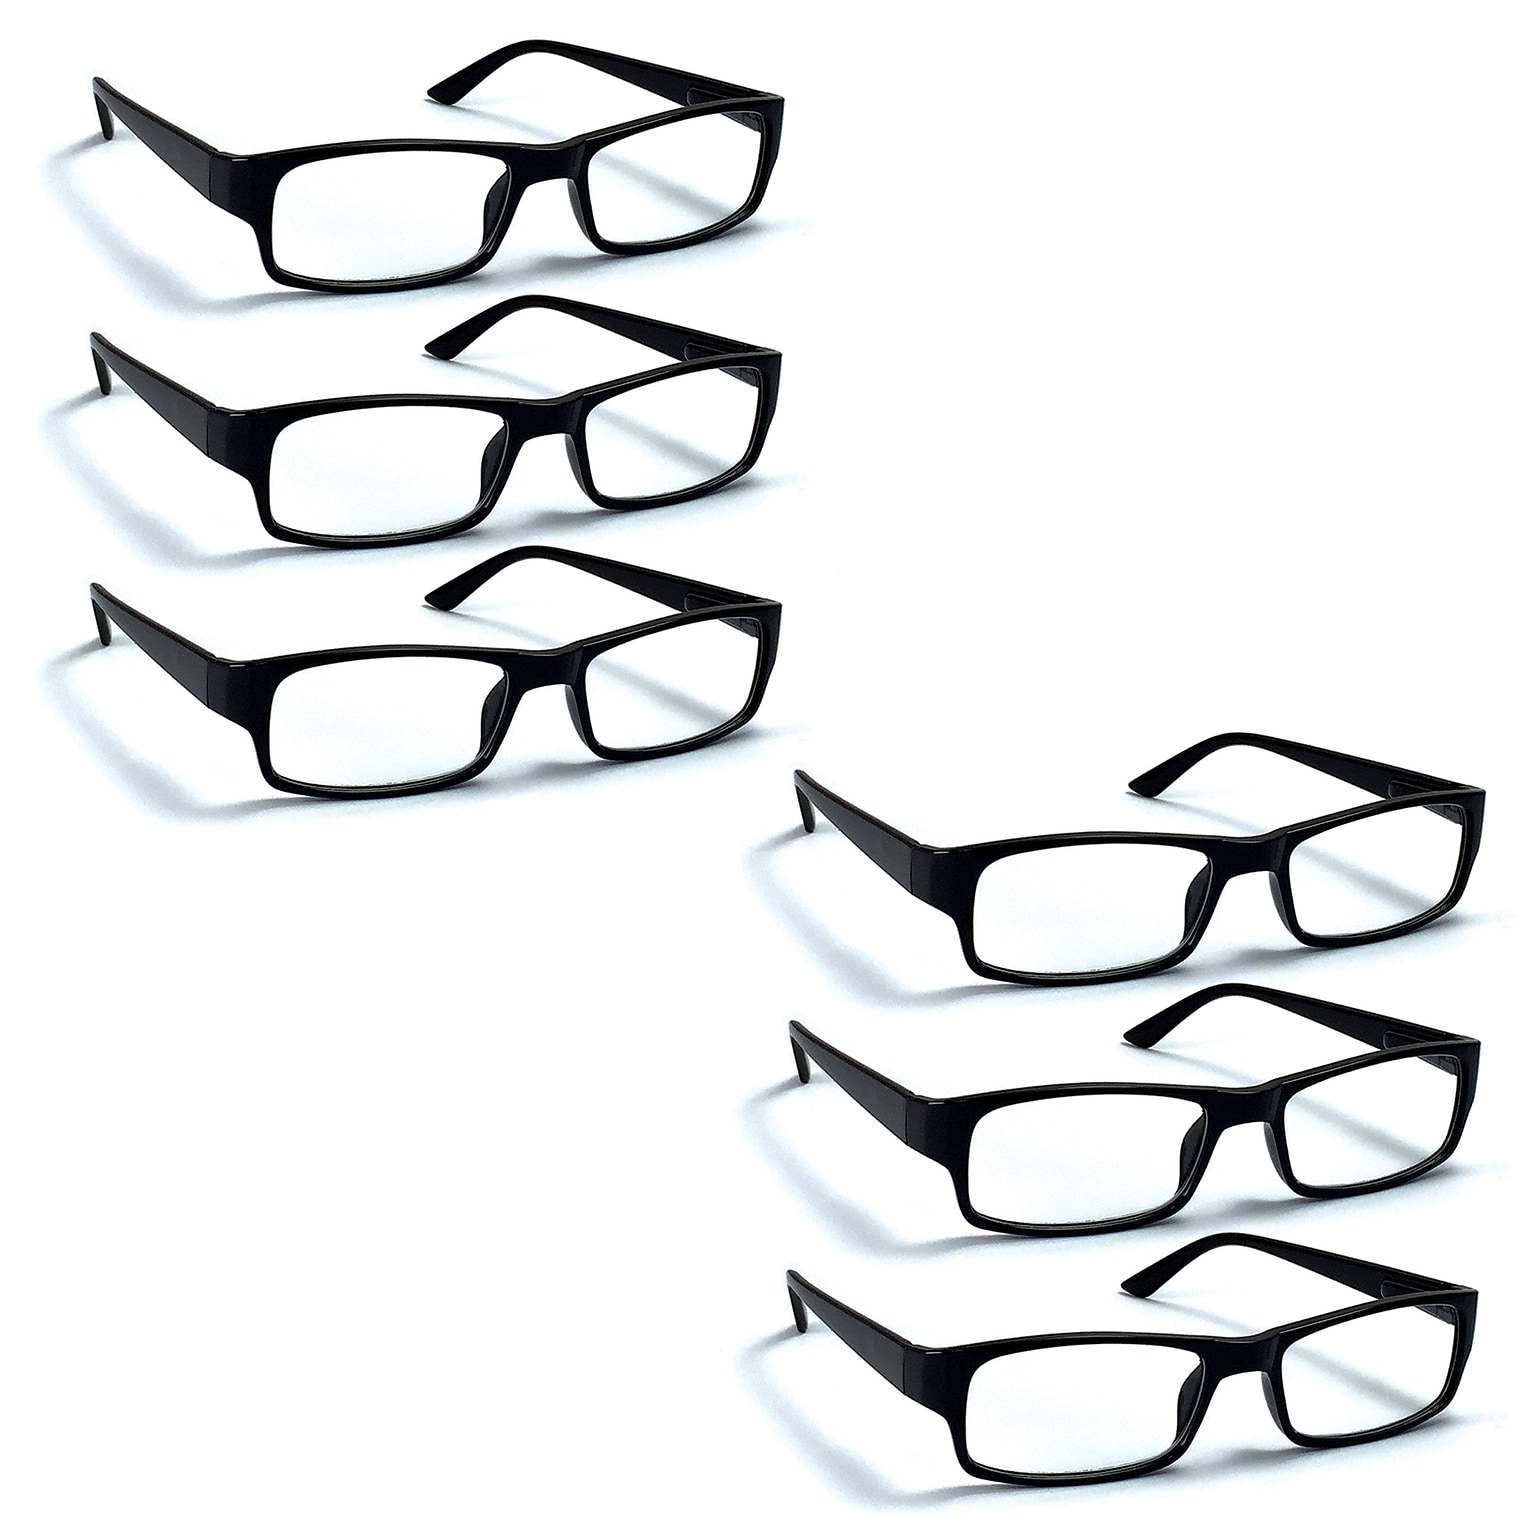 Boost Eyewear Reading Glasses +1.75 Rectangular Frames Black Only (26175)